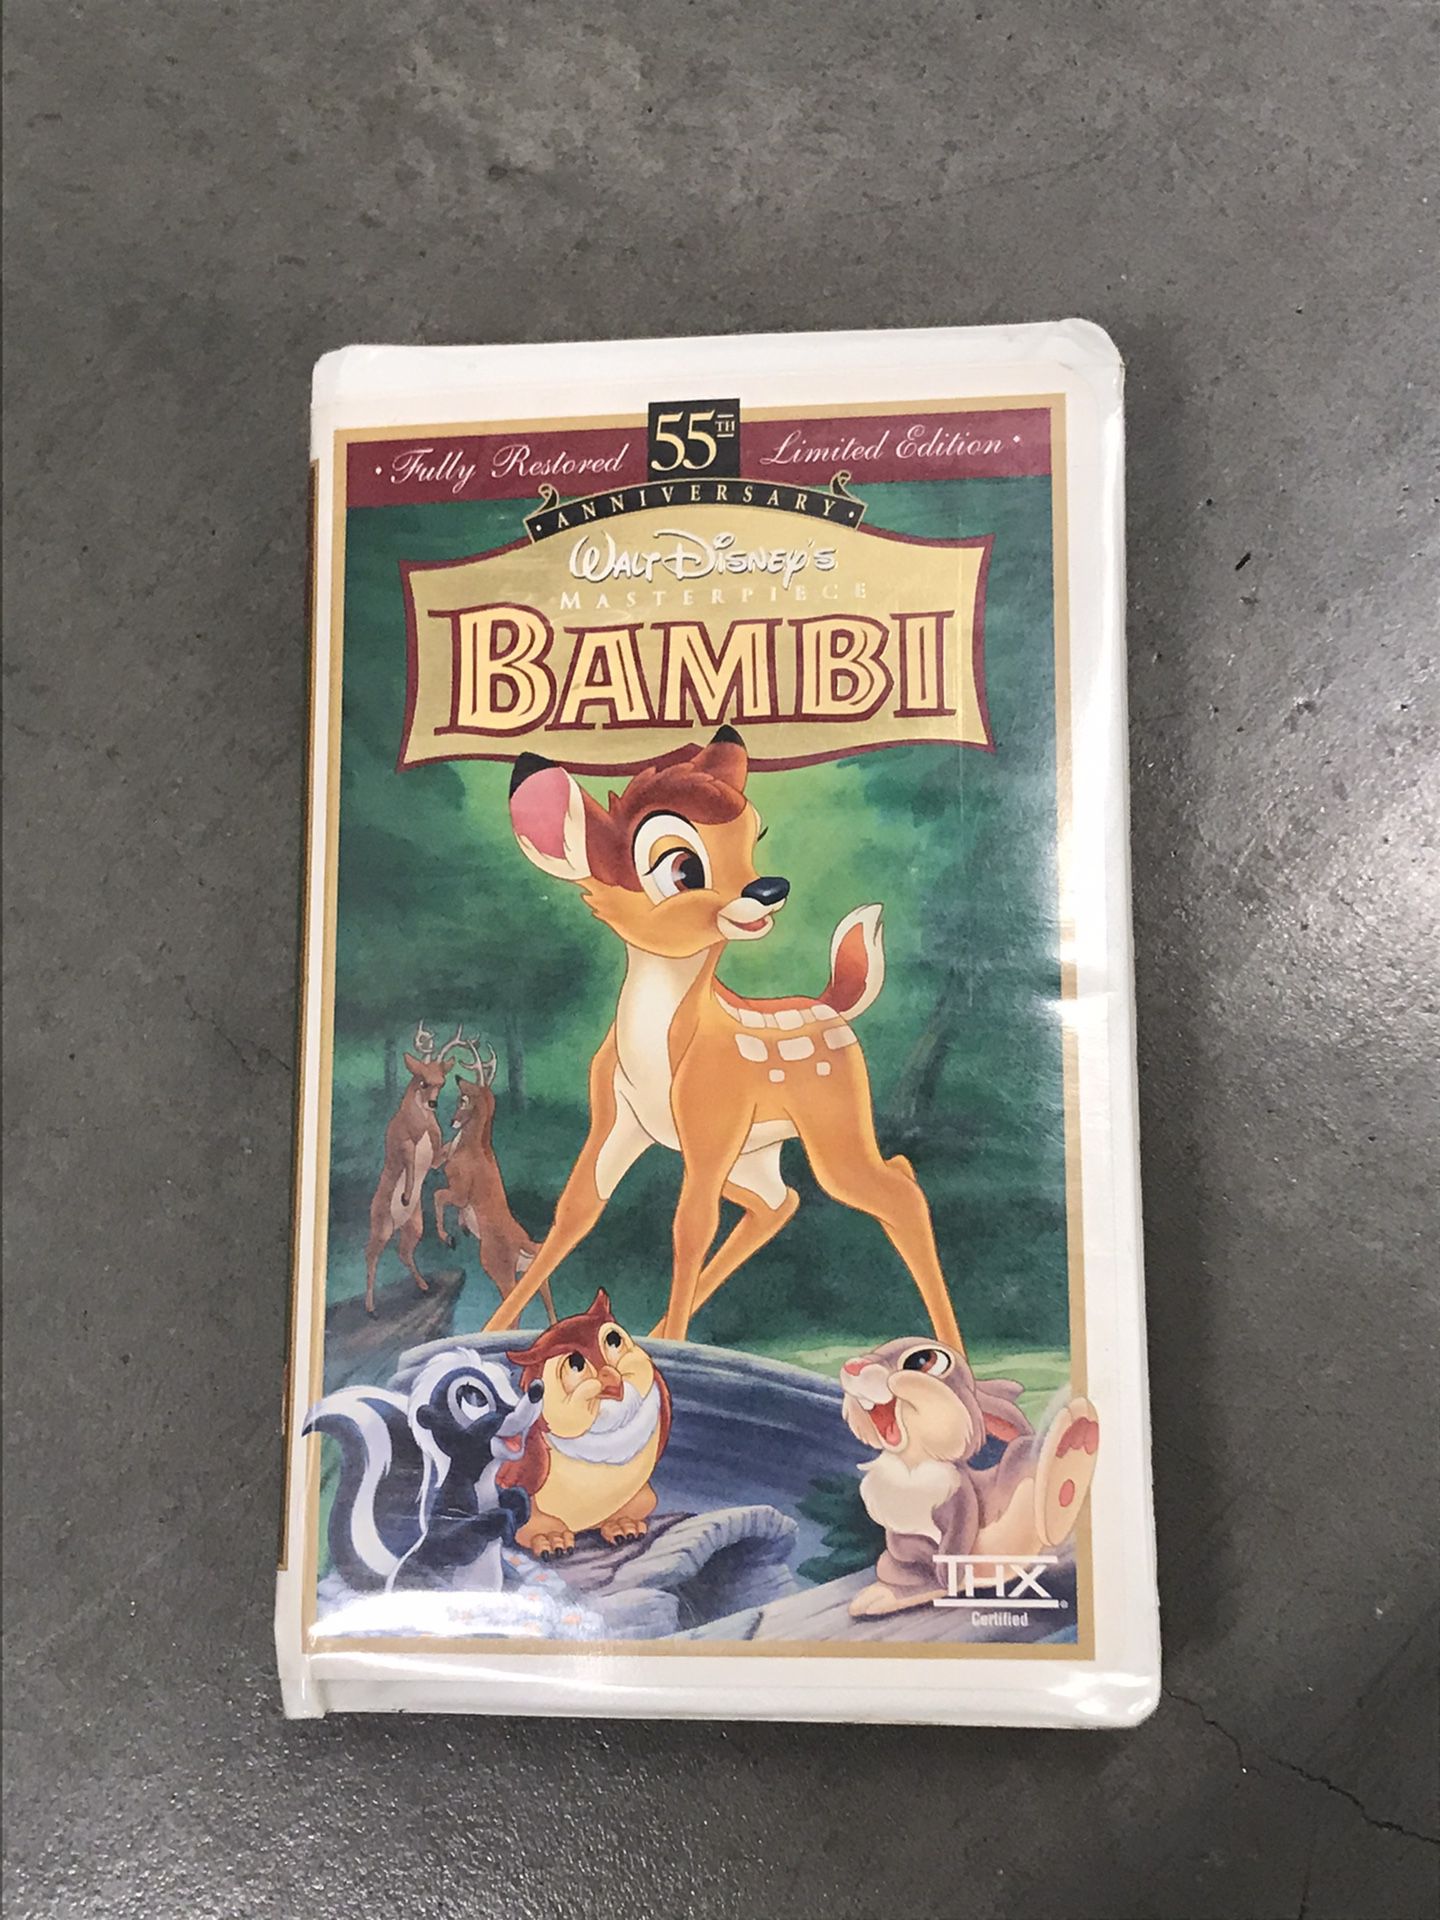 Bambi Vhs tape movie! so beautiful